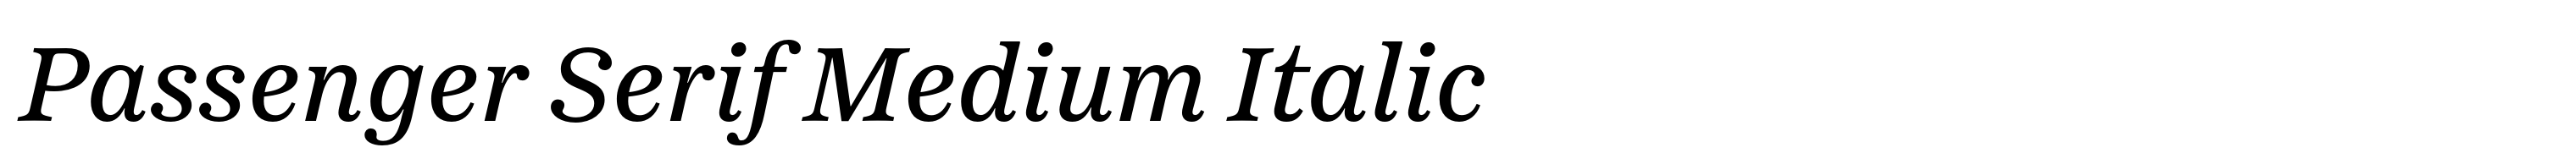 Passenger Serif Medium Italic